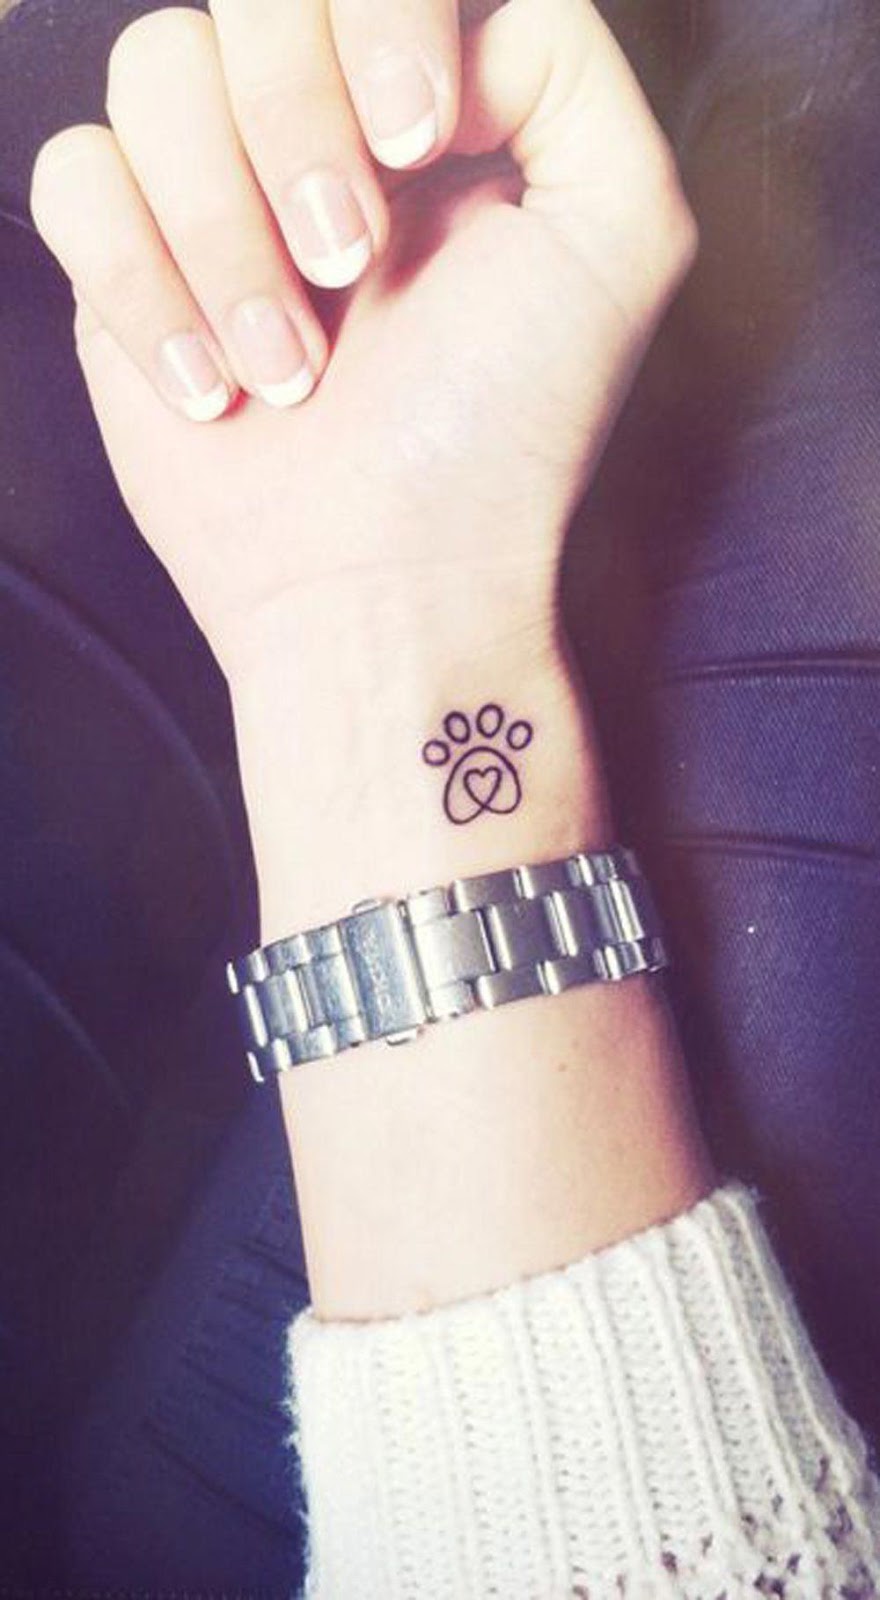 Female Wrist Tattoo Ideas Small Designs (26)